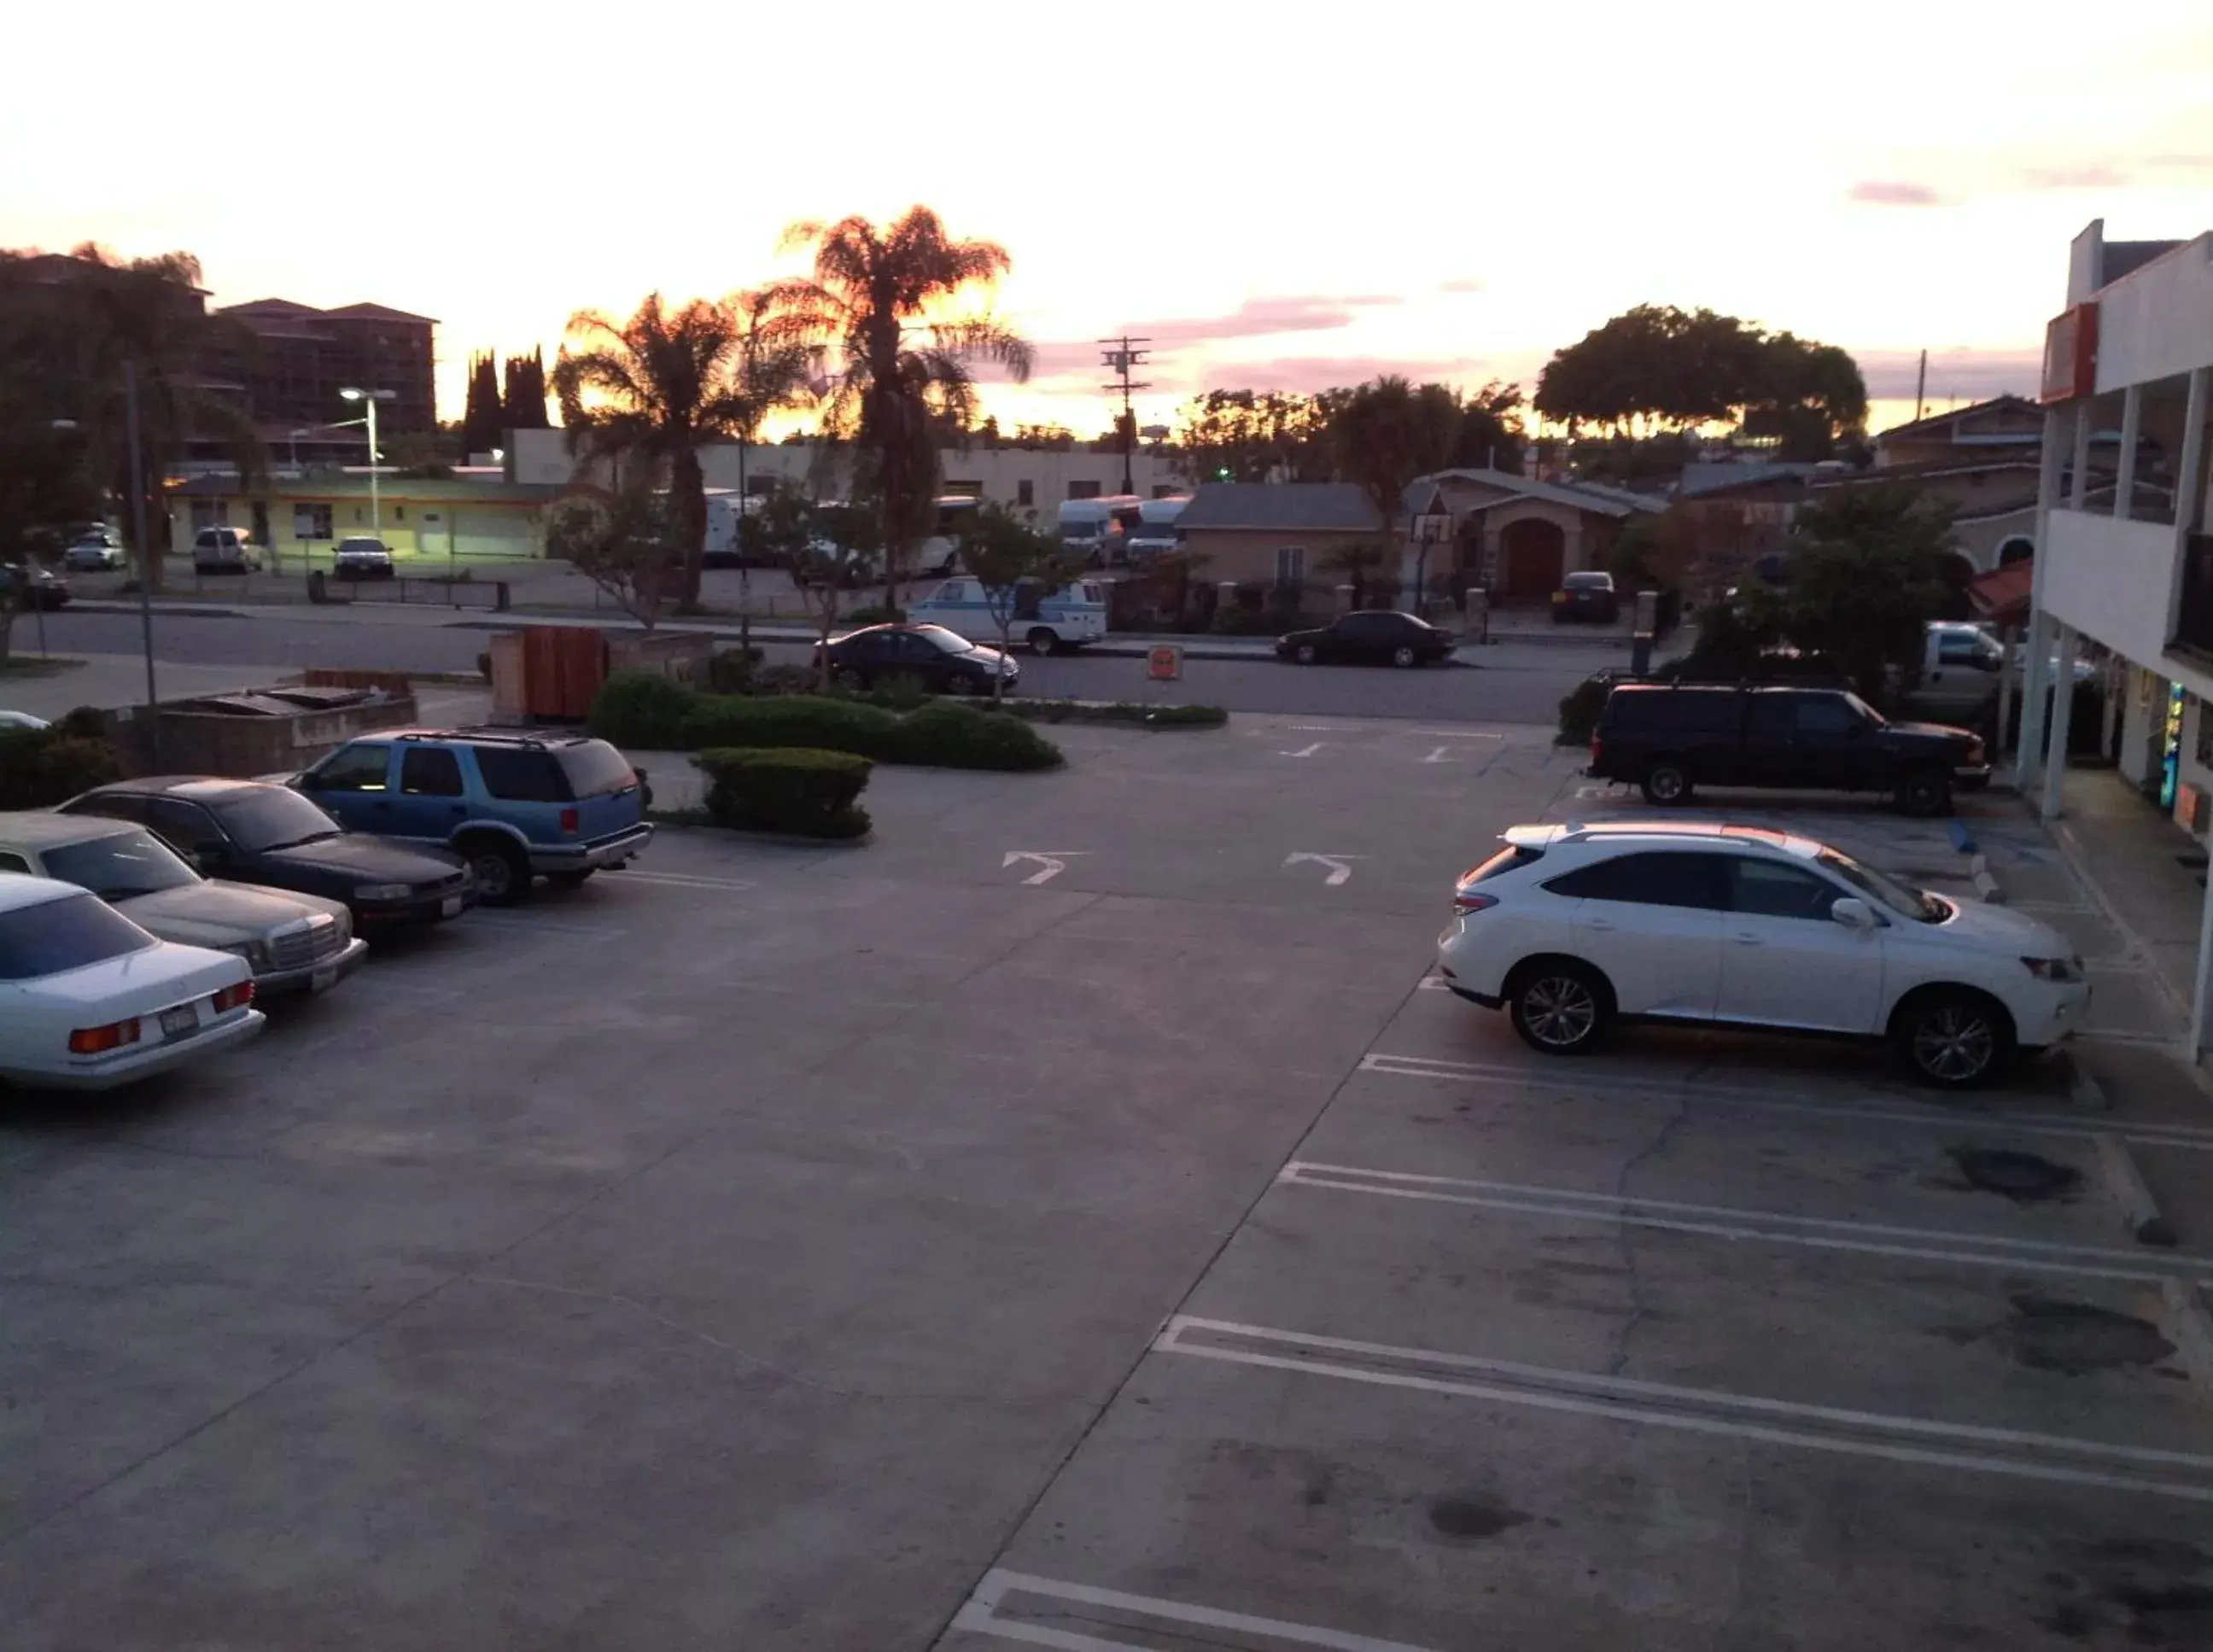 Sunset in Eunice Plaza Motel